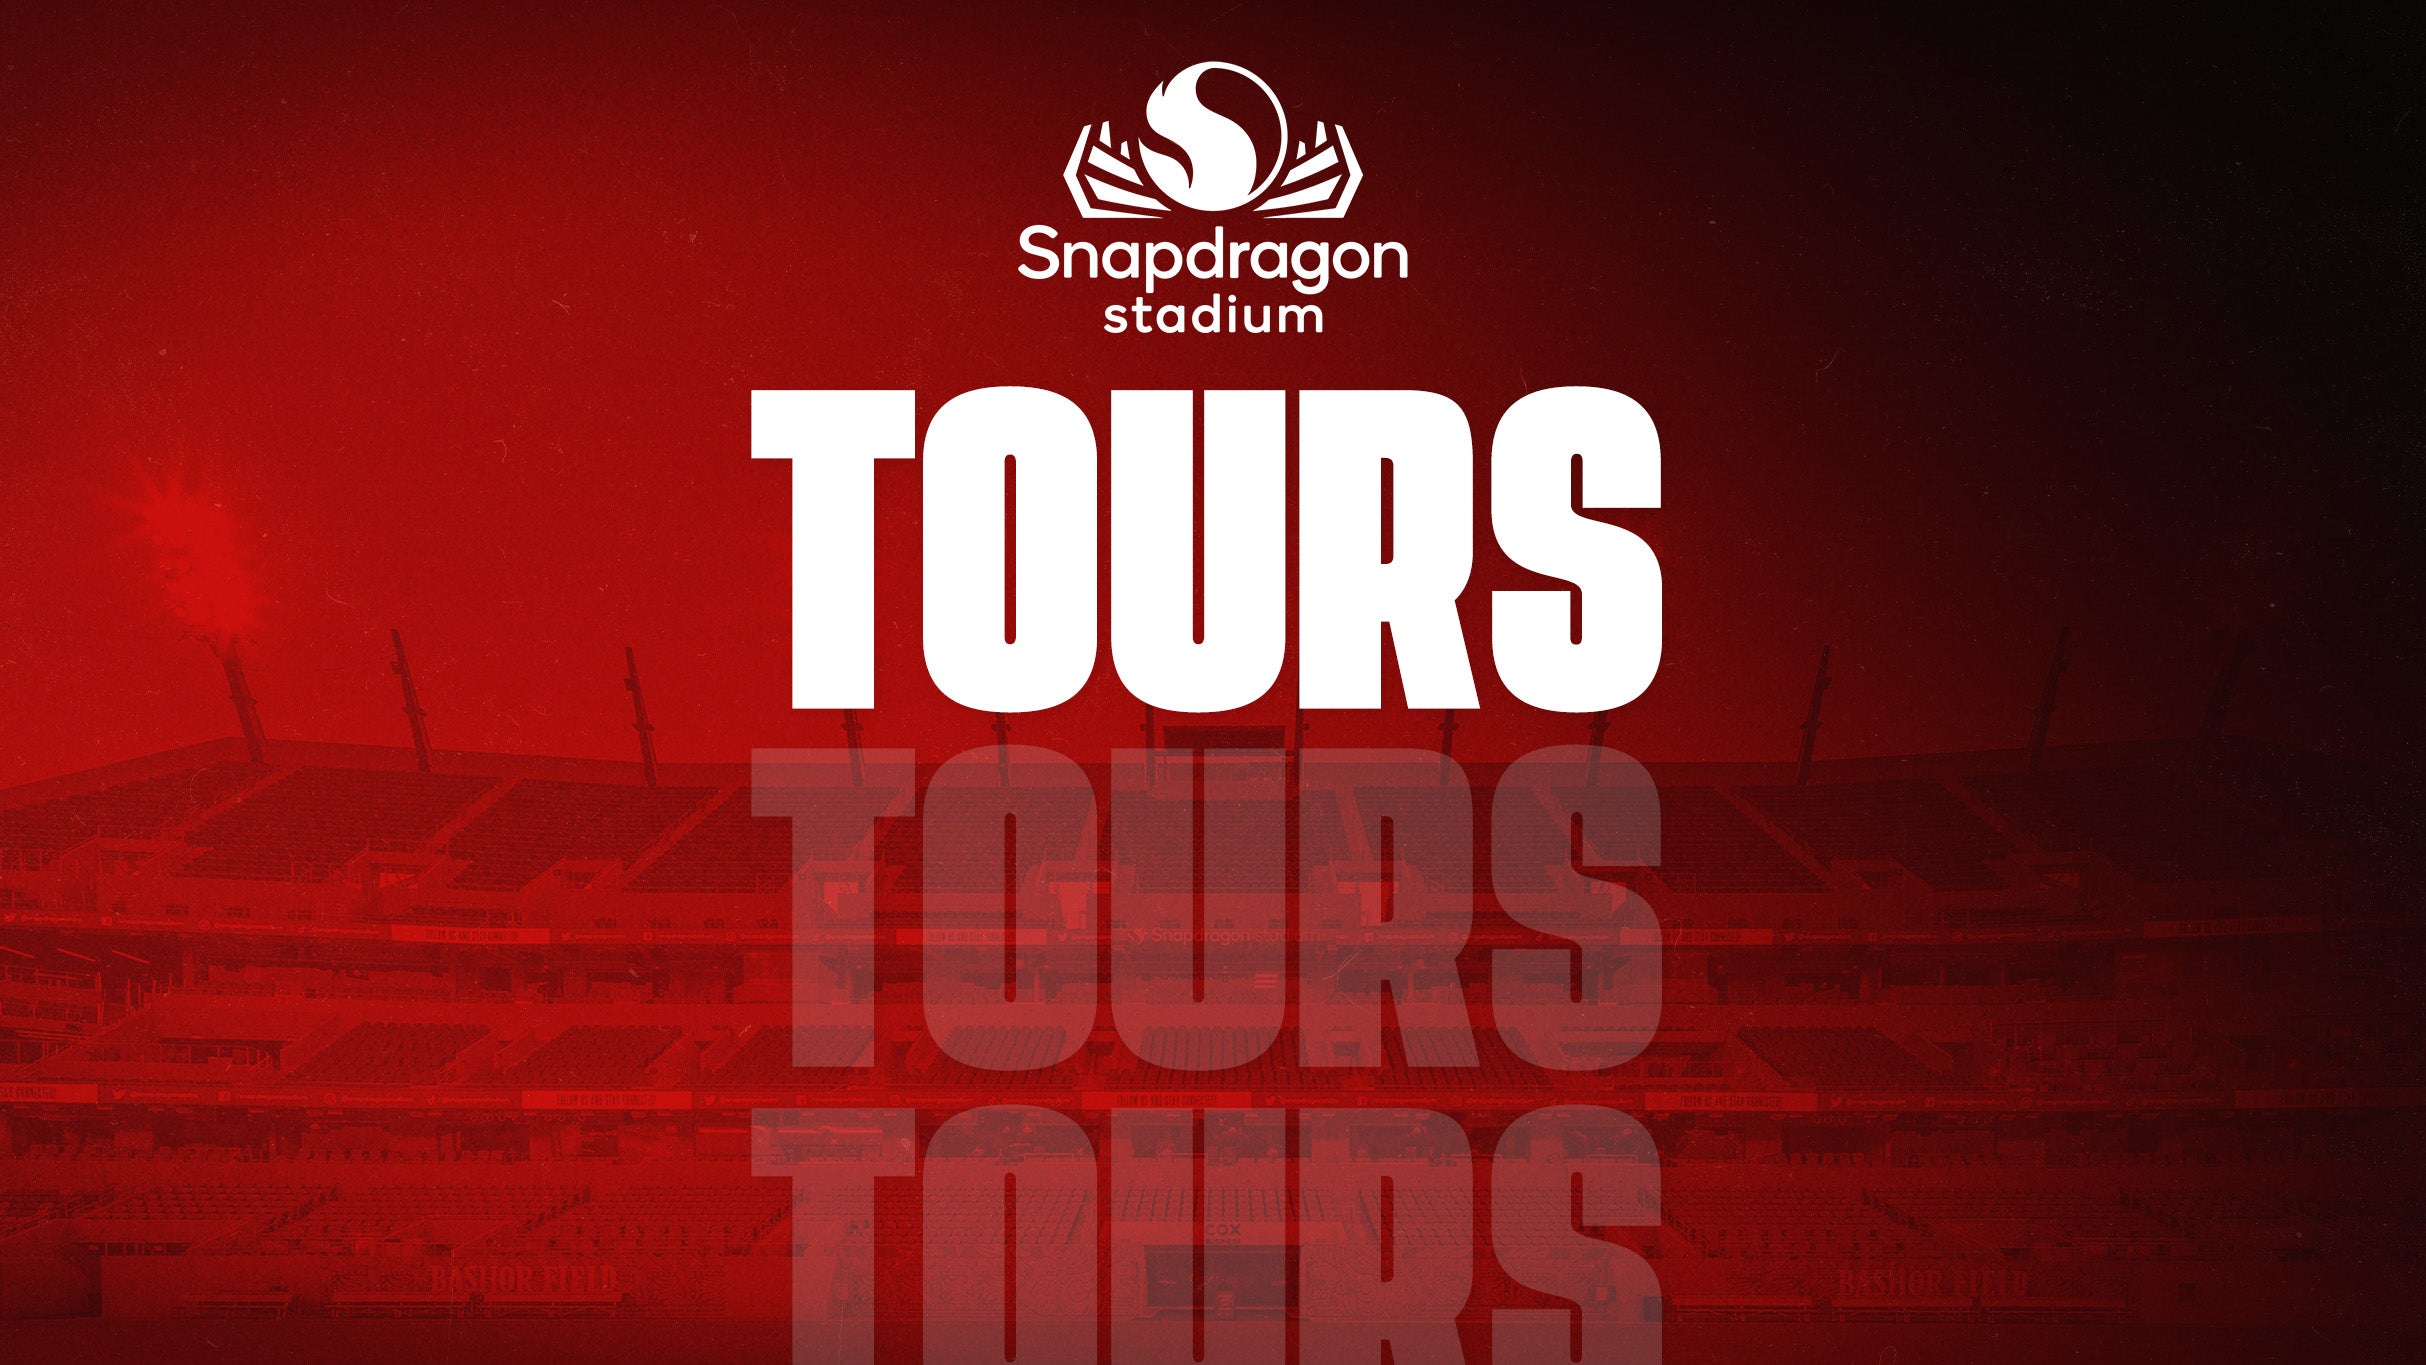 Snapdragon Stadium Tours